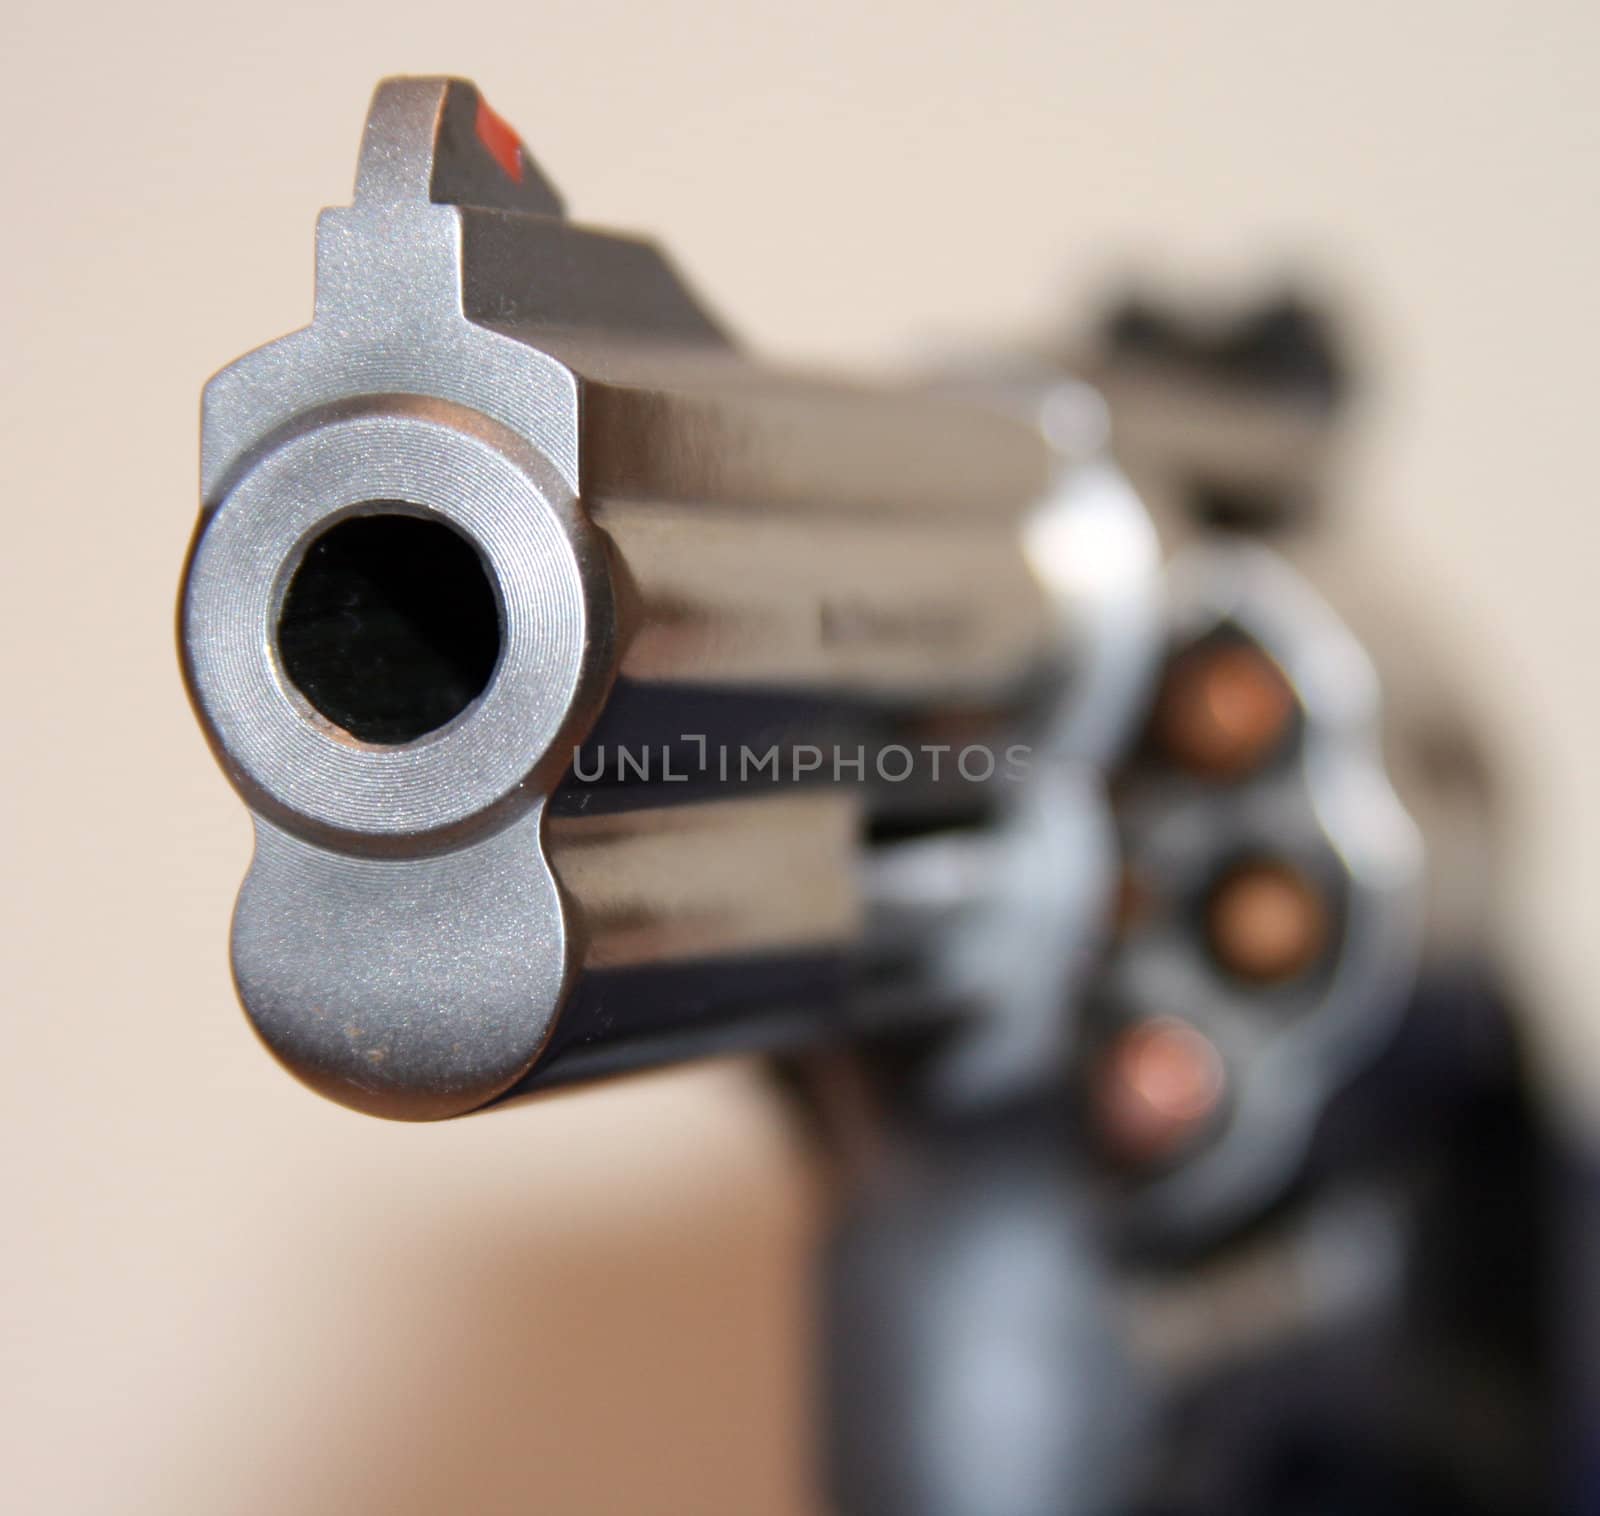 Smith & Wesson .357 Revolver by mrfocus